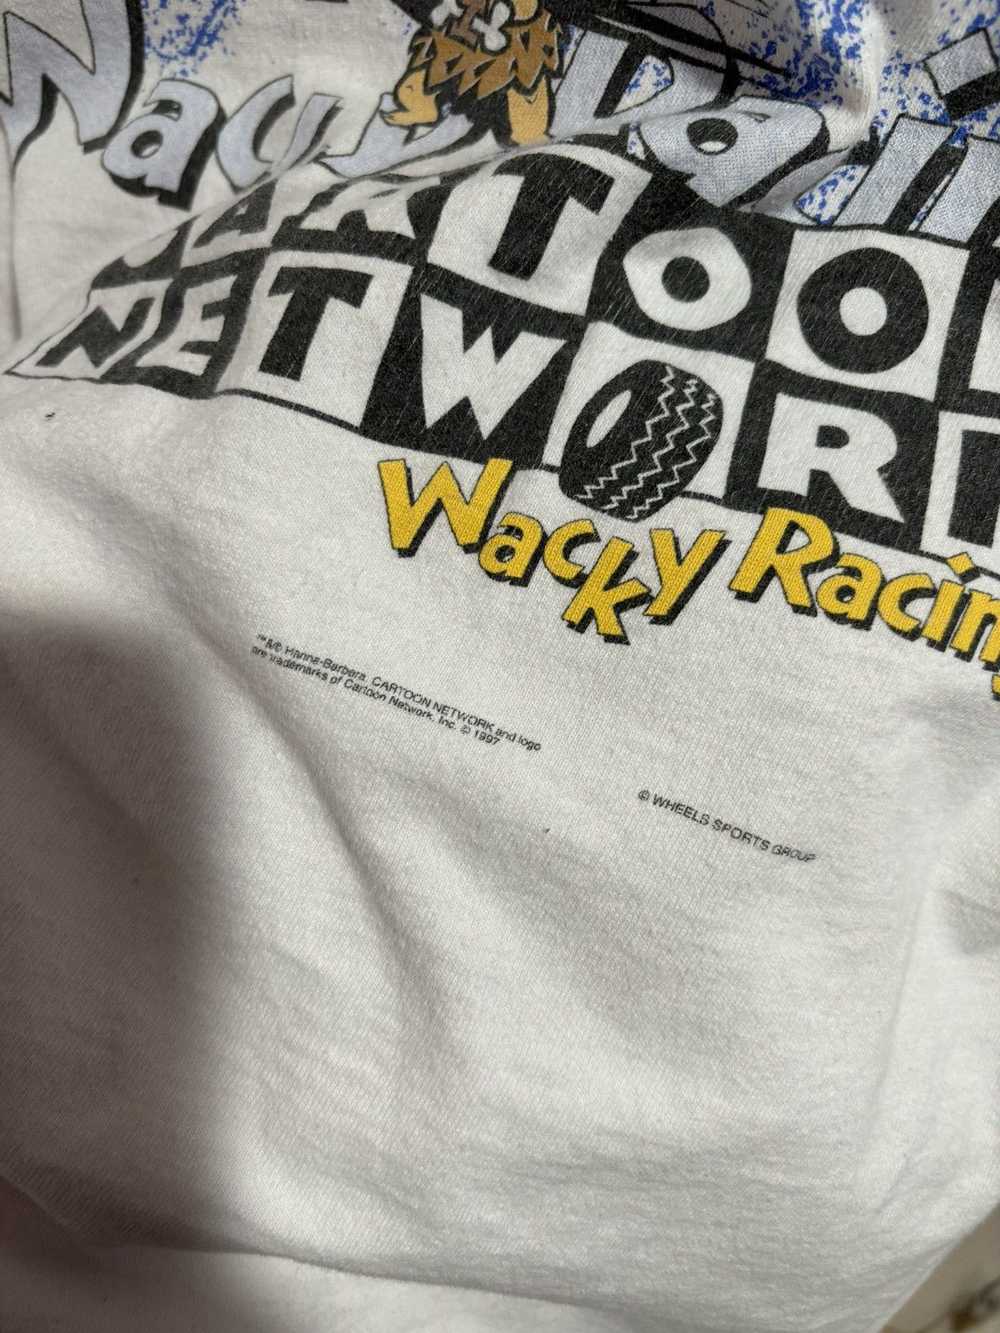 Vintage Cartoon Network wacky racing shirt - image 4